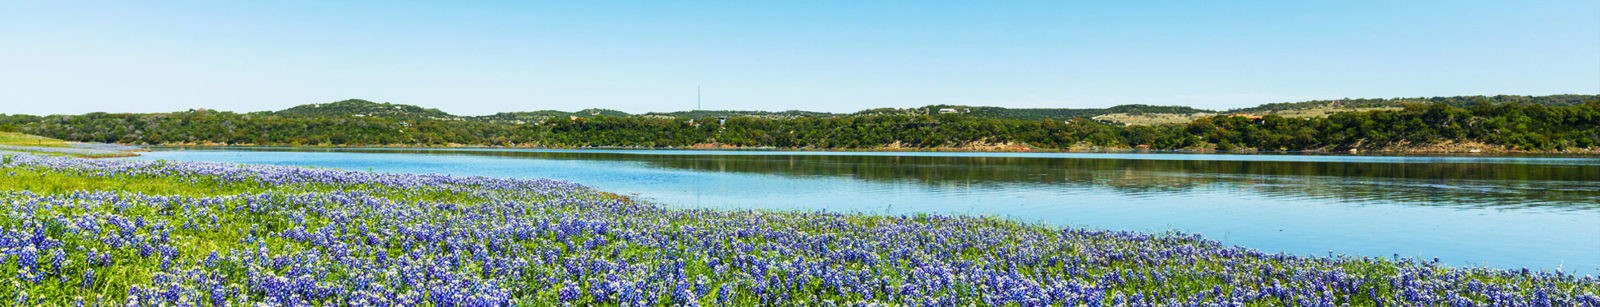 Field of Texas blue bonnets